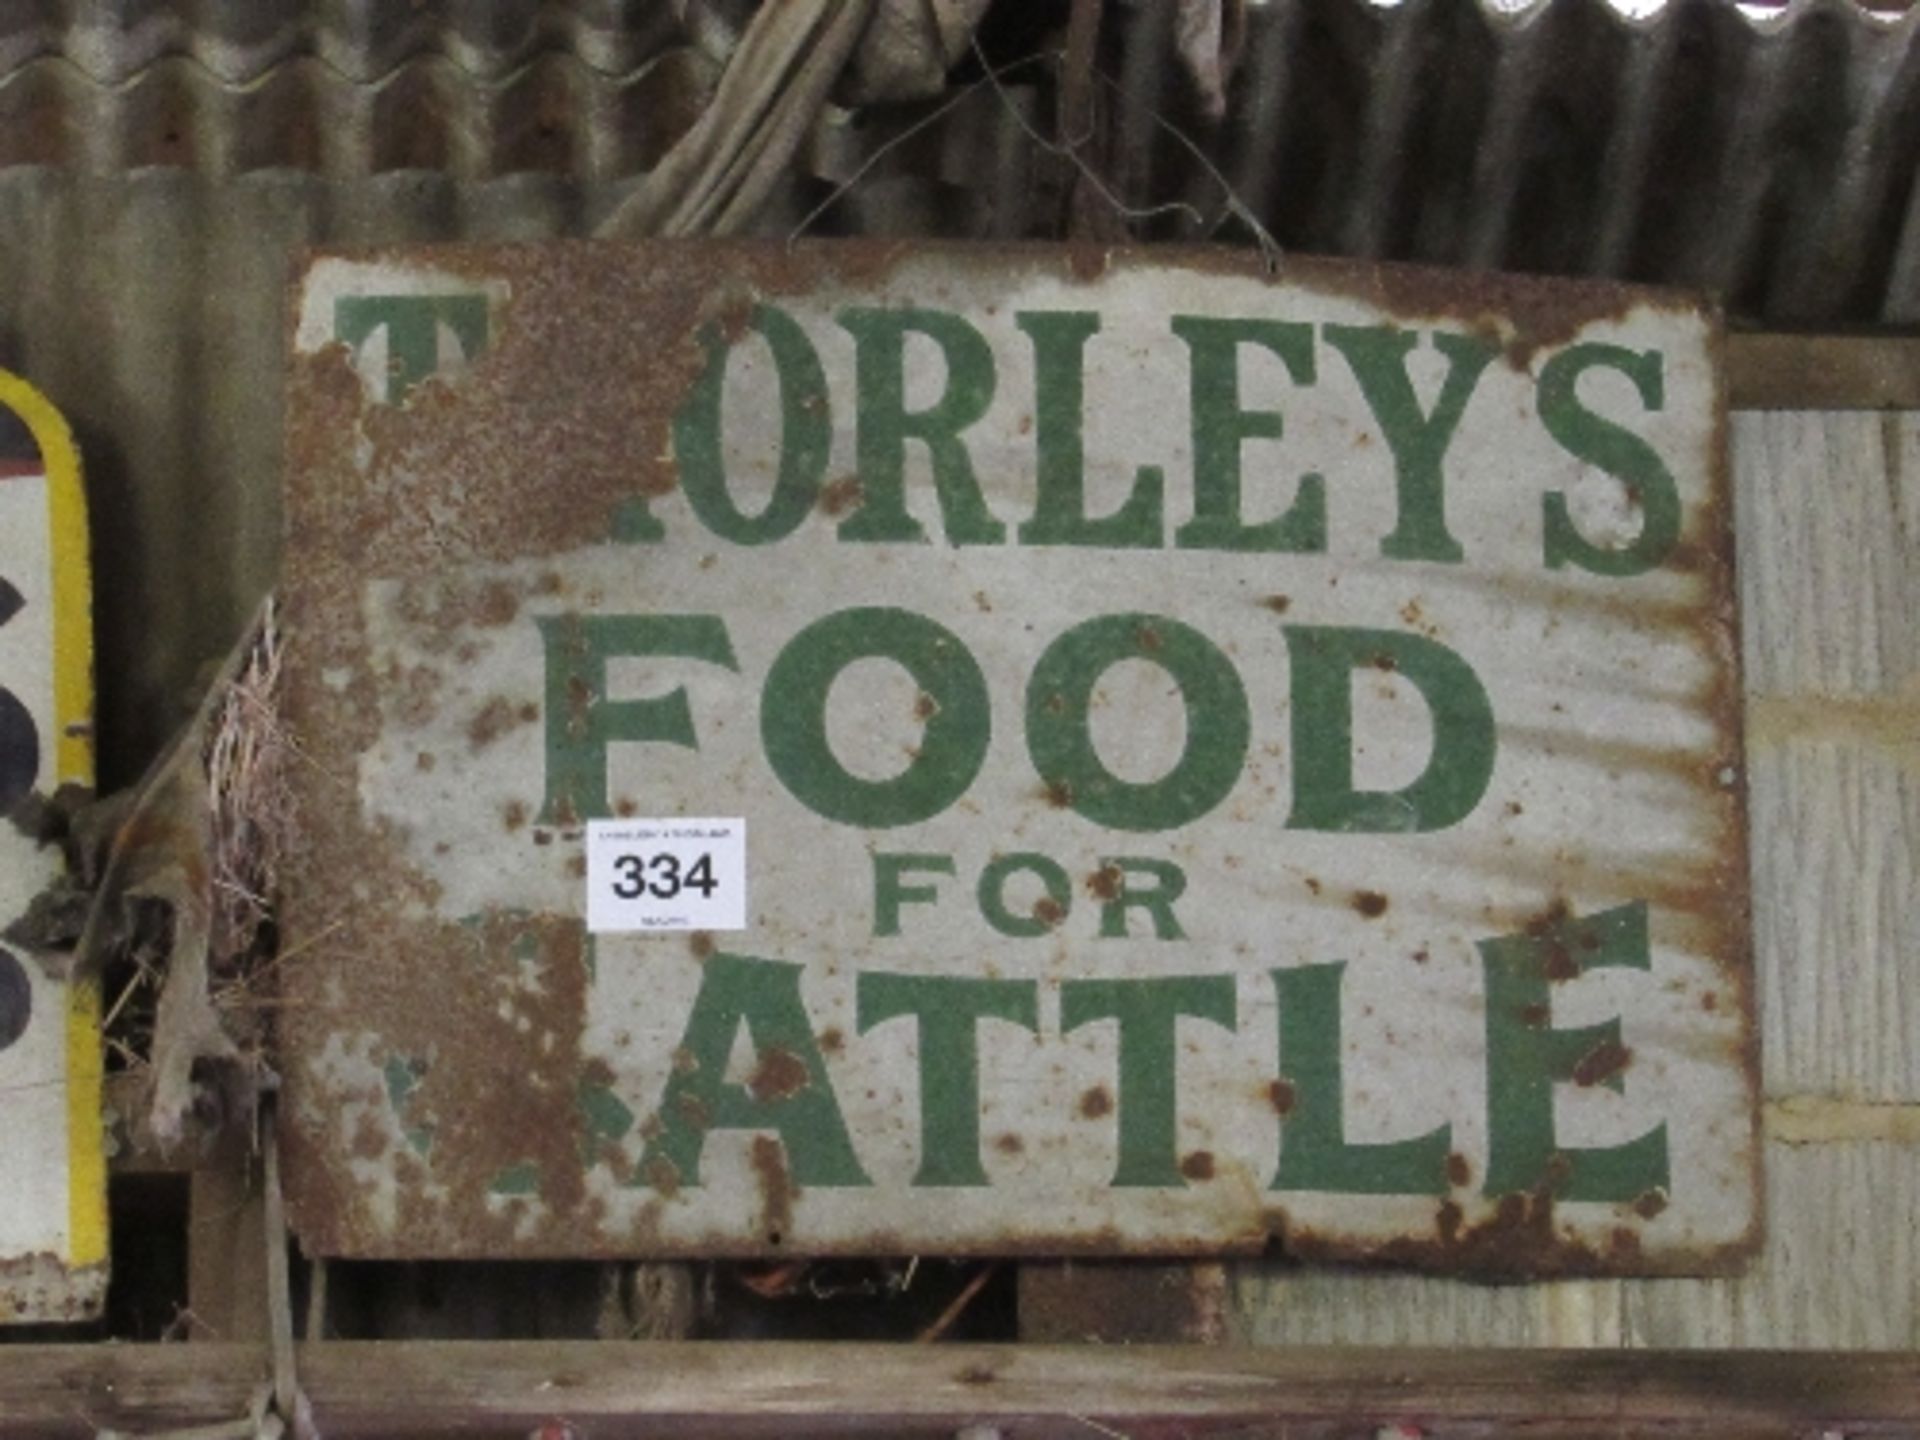 Thorleys Food for Cattle enamel sign 82cm x 58cm